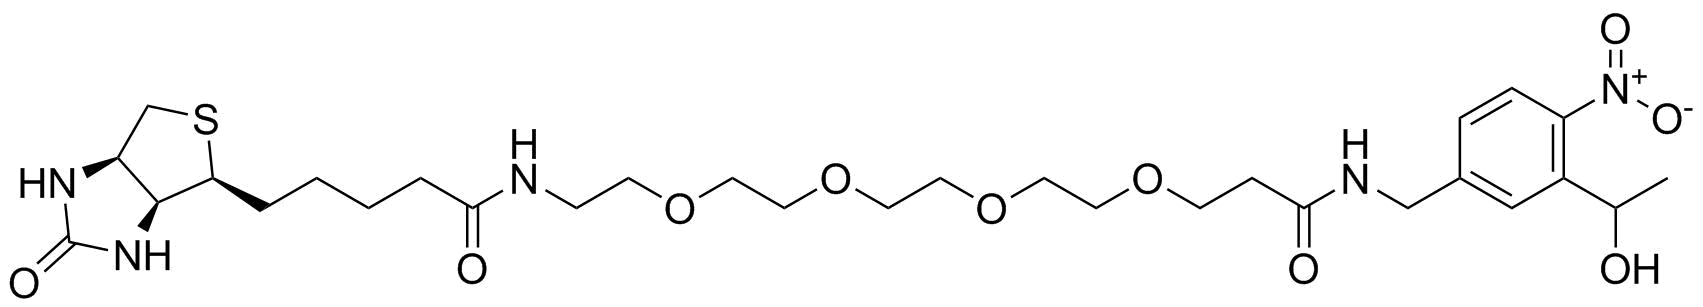 PC-Biotin-PEG4